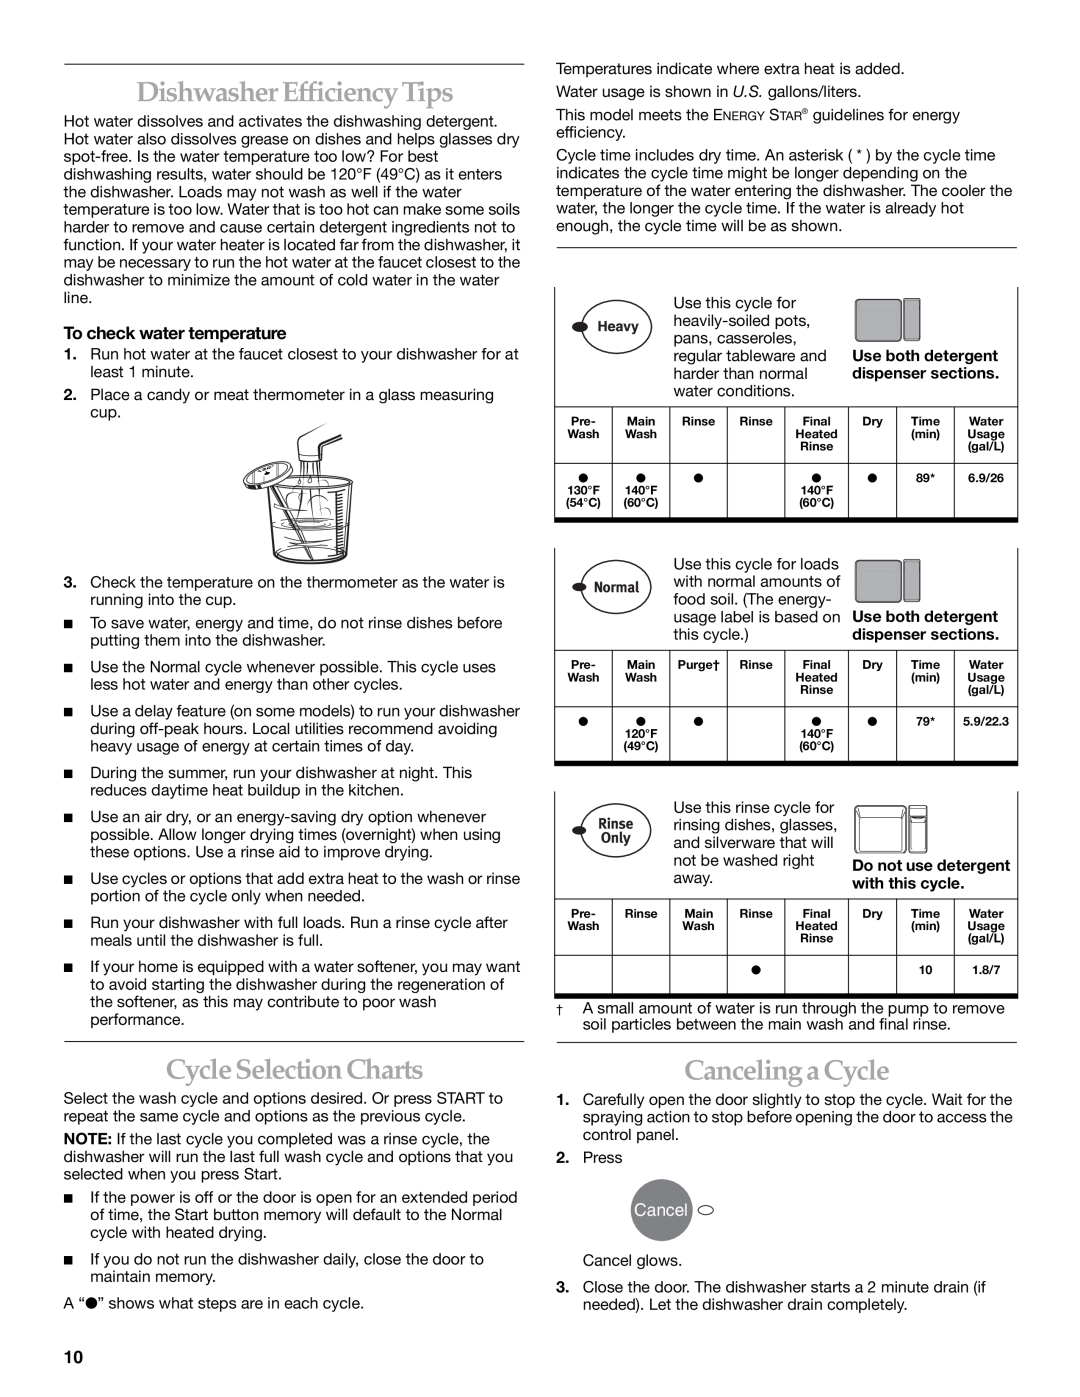 KitchenAid KUDI01FK Dishwasher Efficiency Tips, Cycle Selection Charts, Canceling a Cycle, To check water temperature 